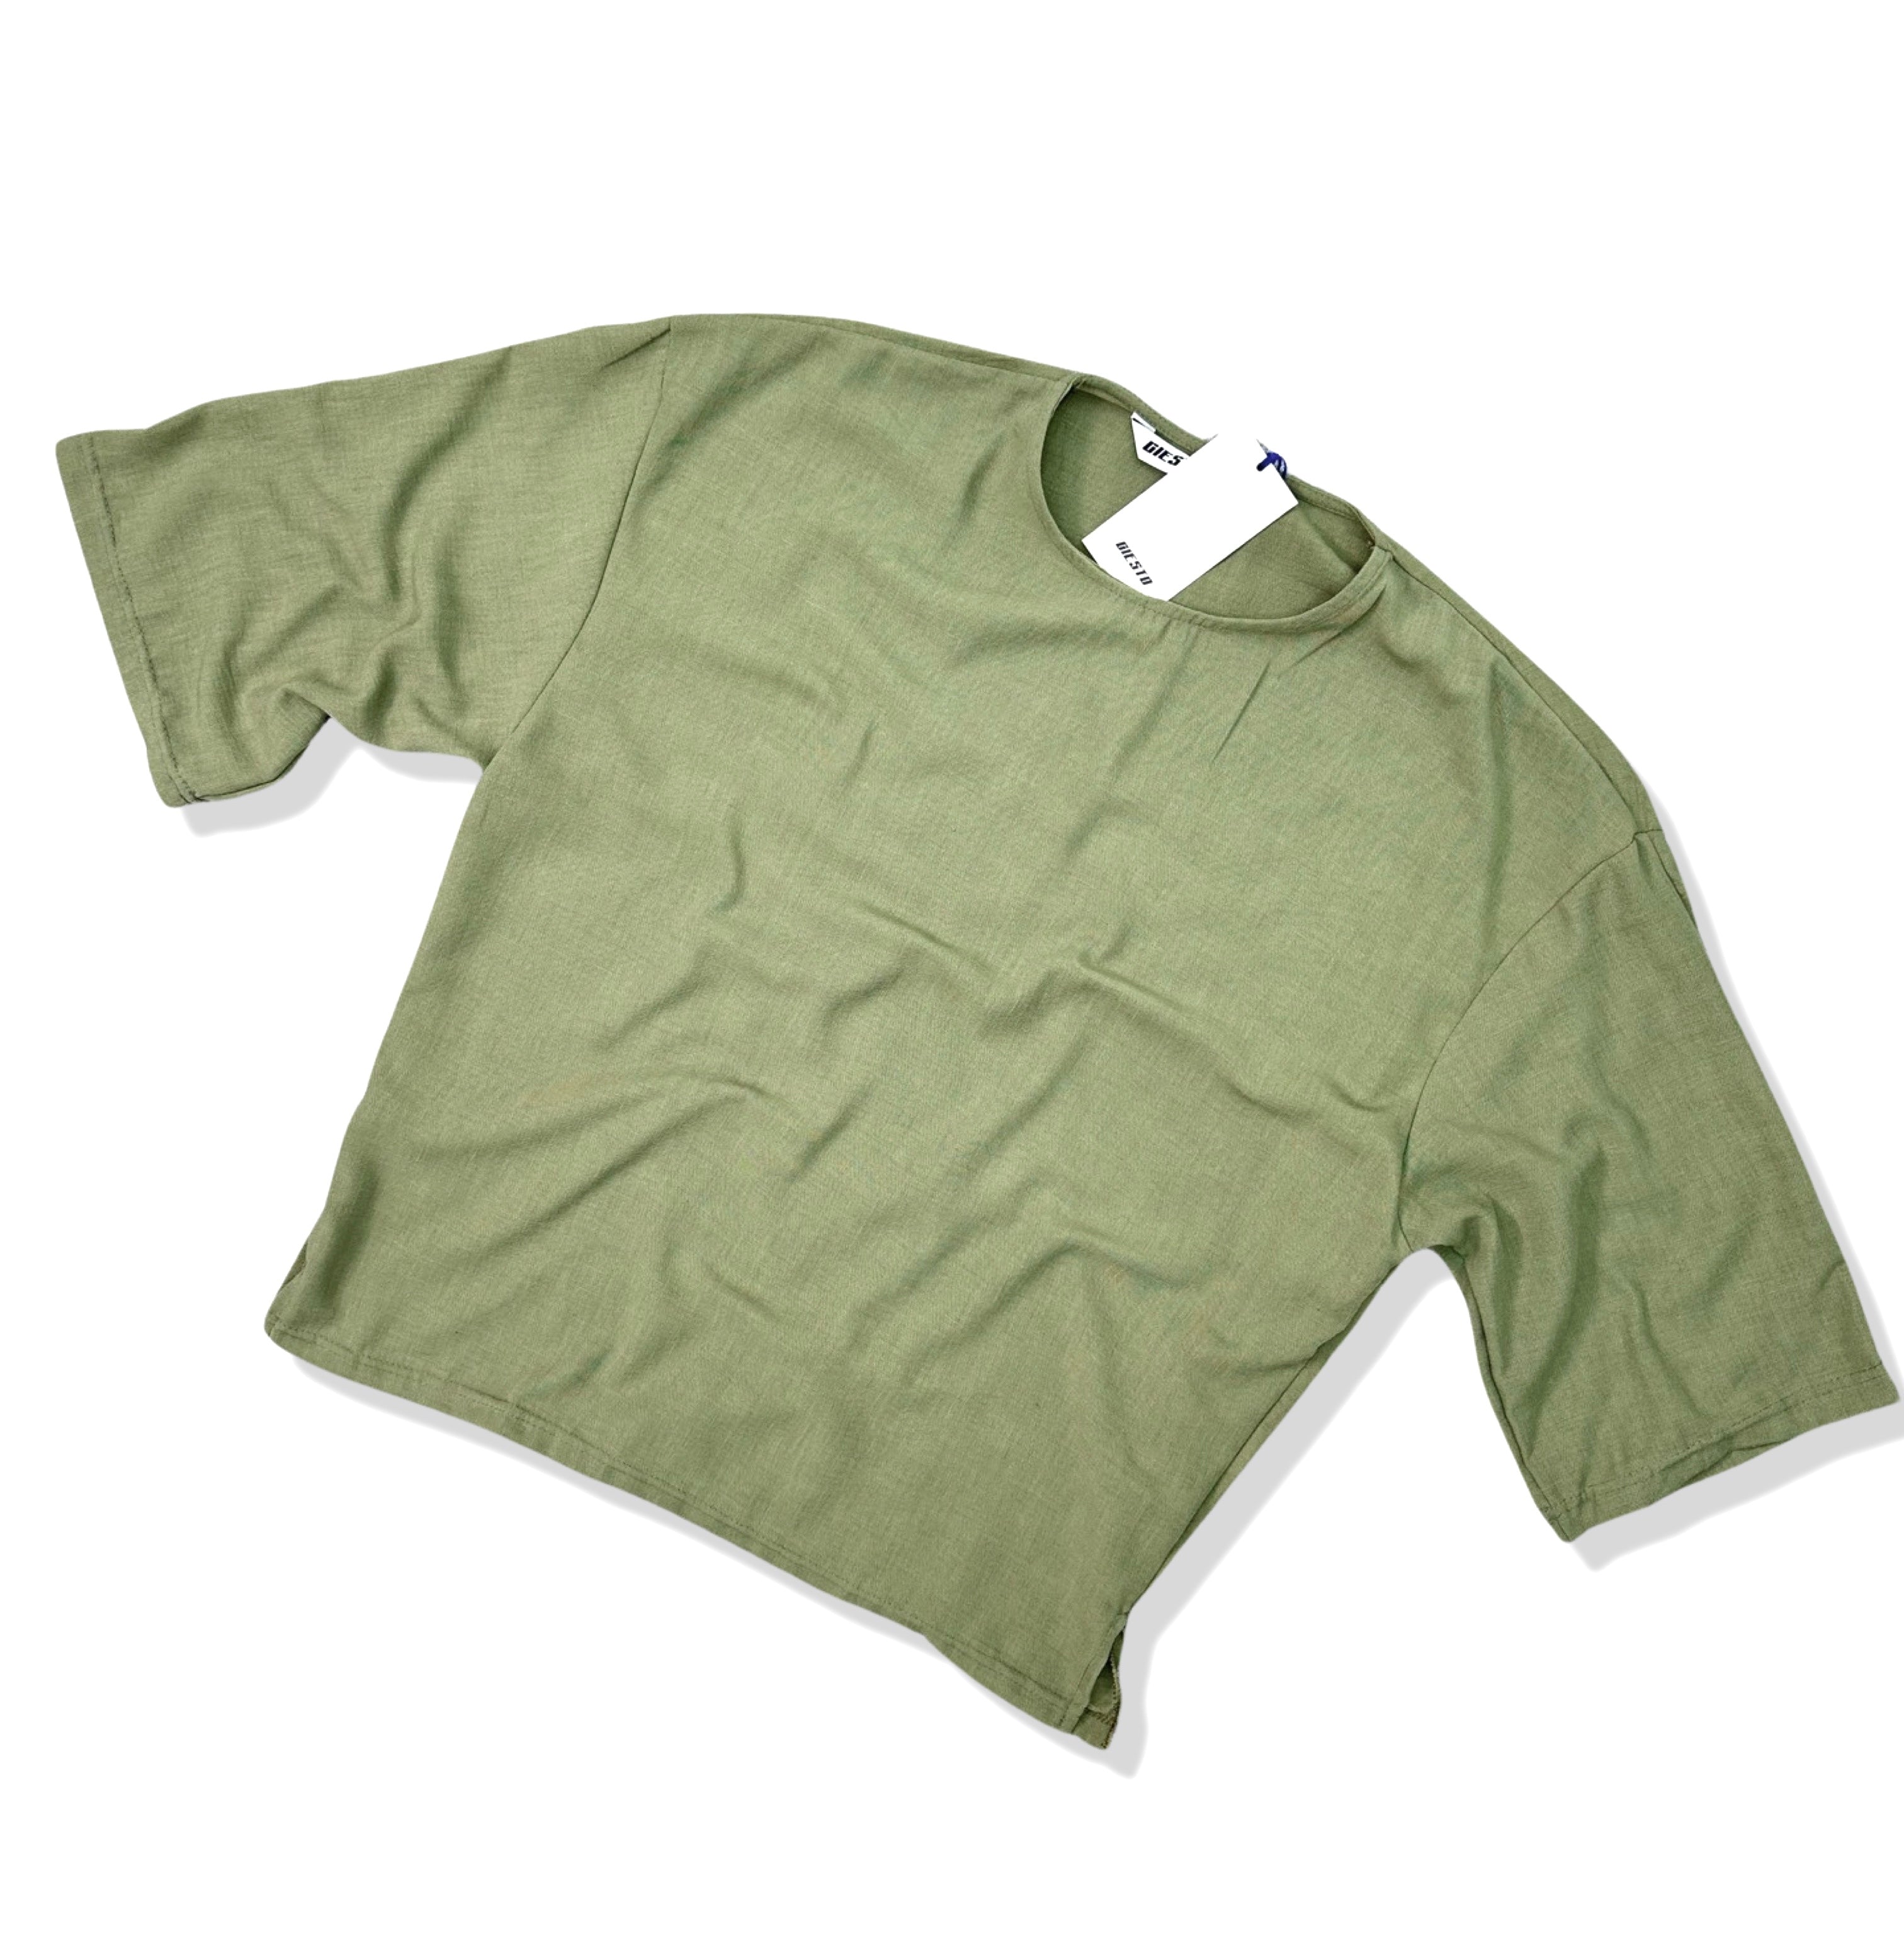 MT1795 - Keten Fakir Kol T-Shirt